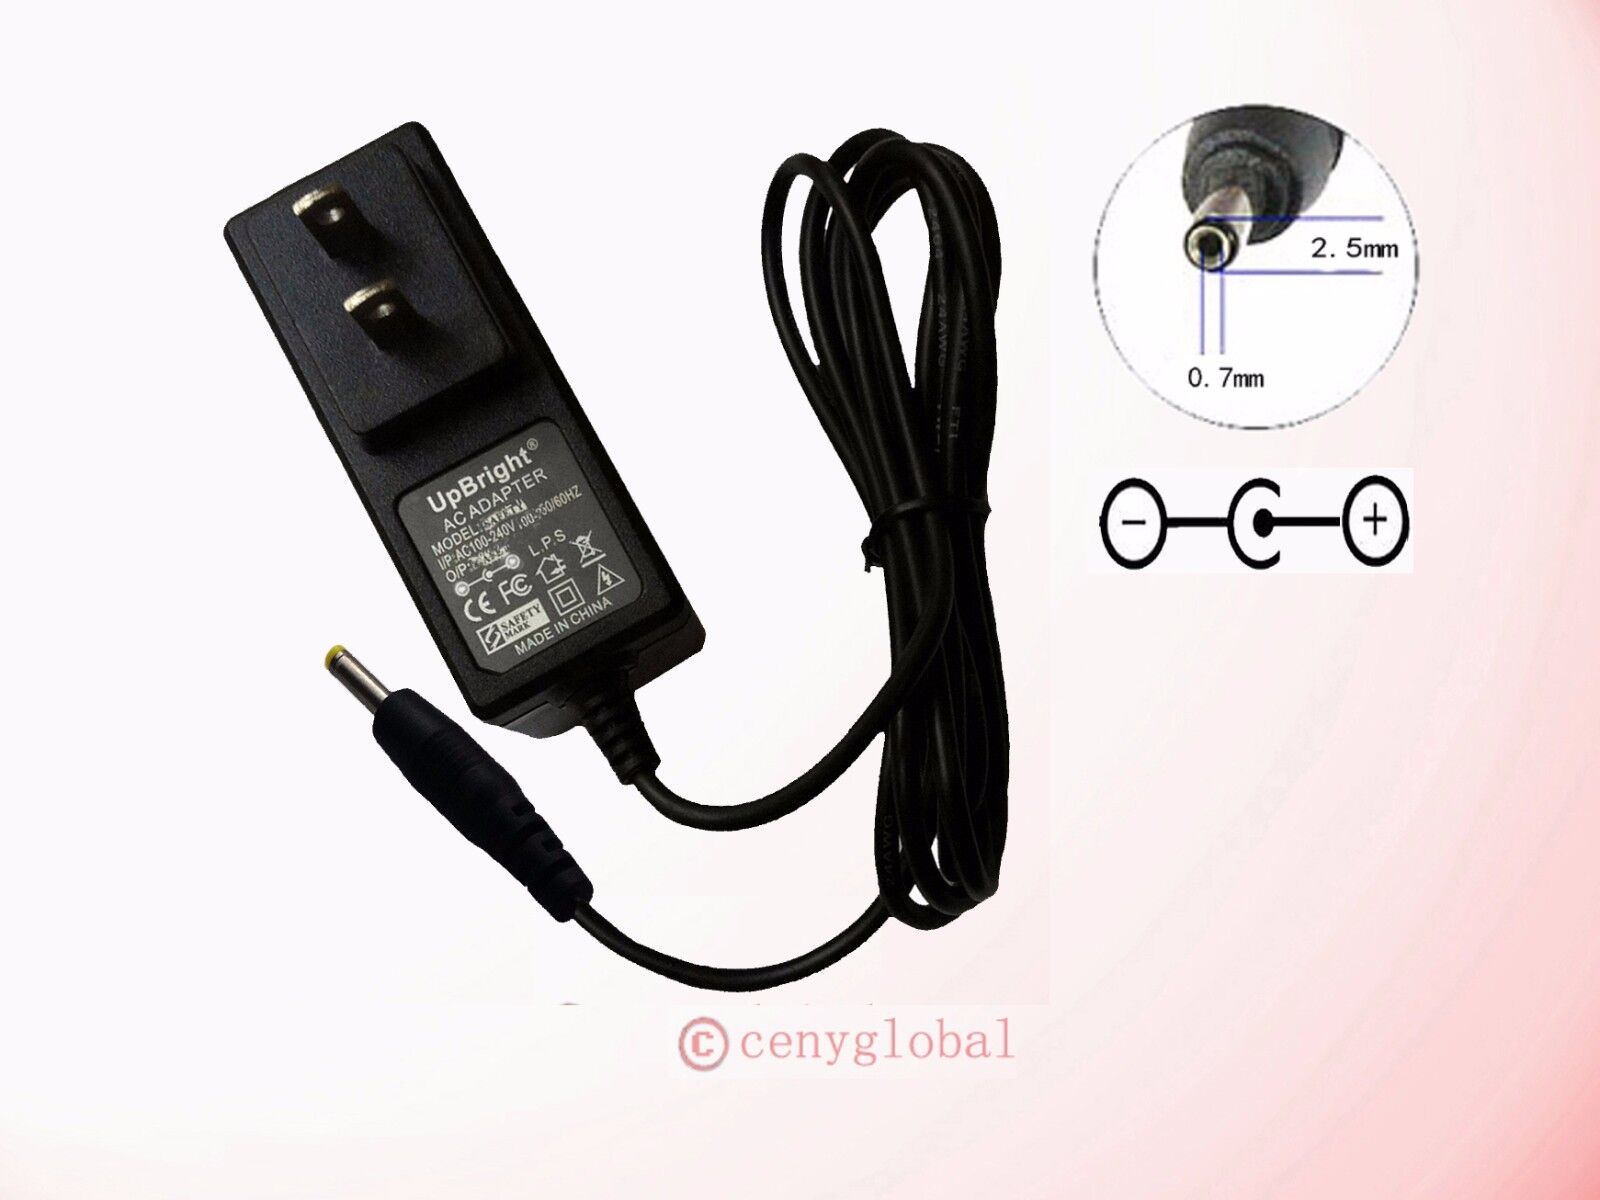 AC 100V-240V Converter Adapter DC Power Supply Plug 2.5mm x 0.7mm Series Global